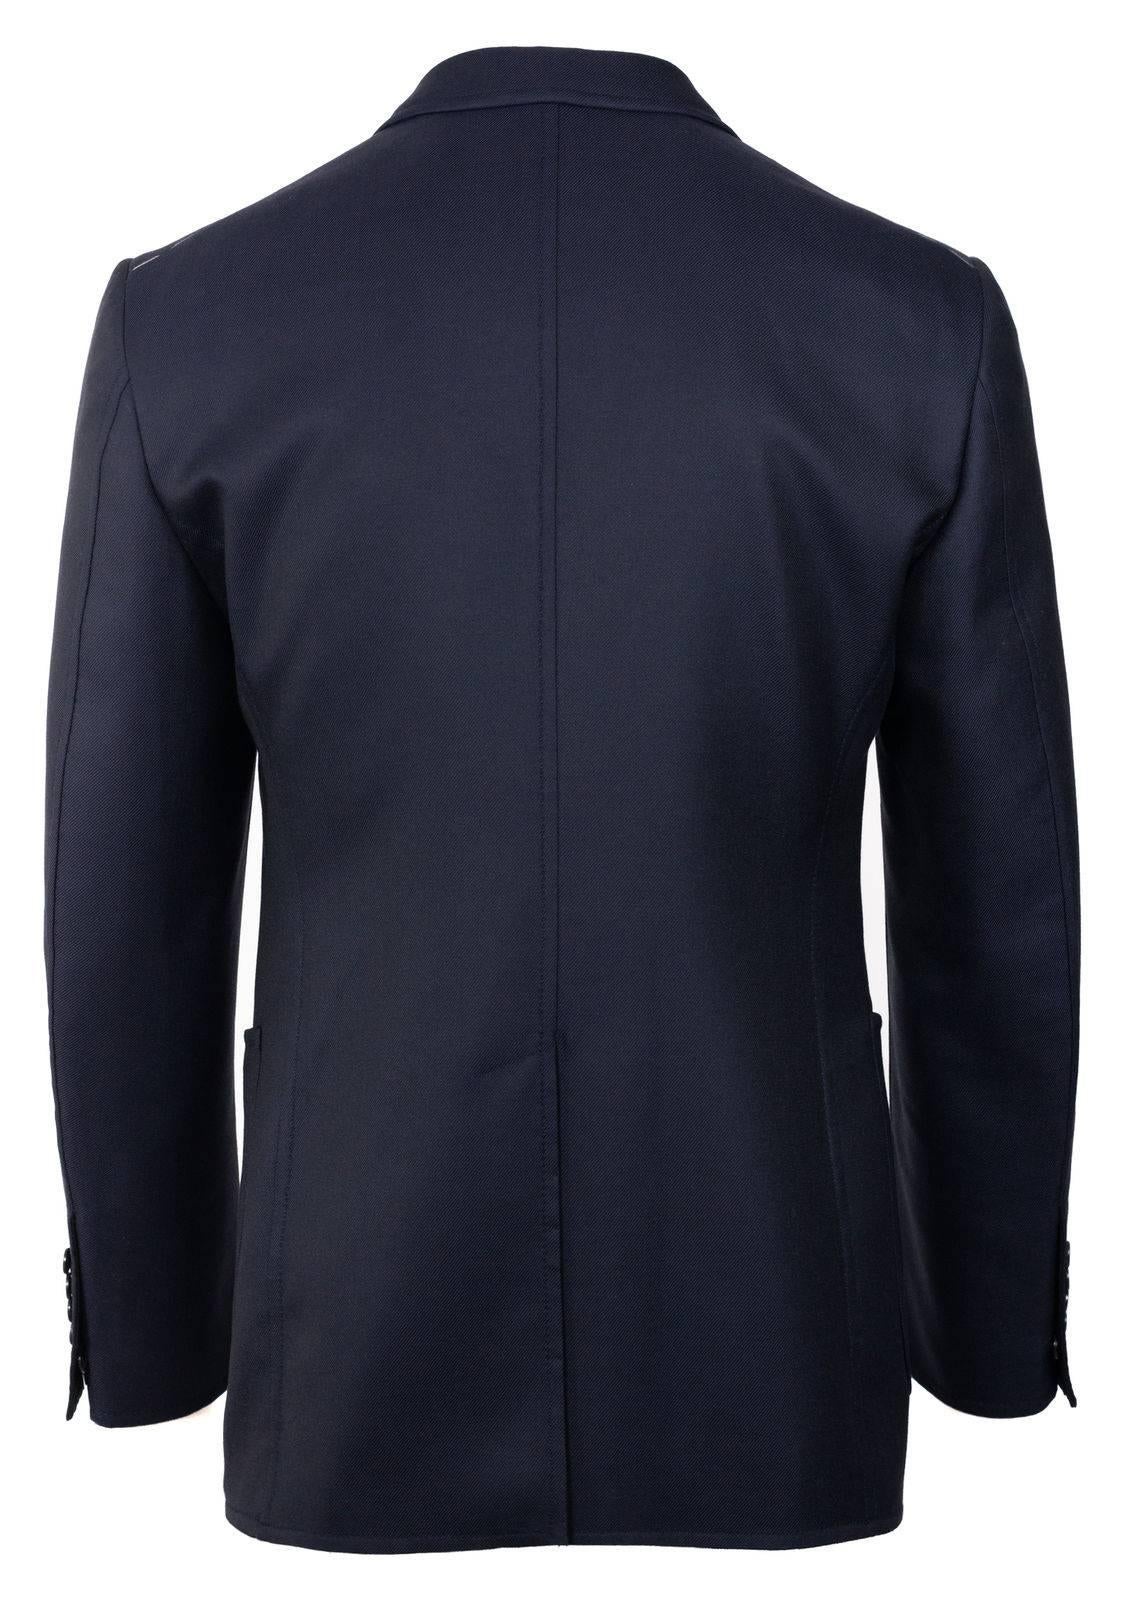 Black Tom Ford Shelton Navy Wool Blazer Sports Jacket 48R 38R ret $3750 For Sale